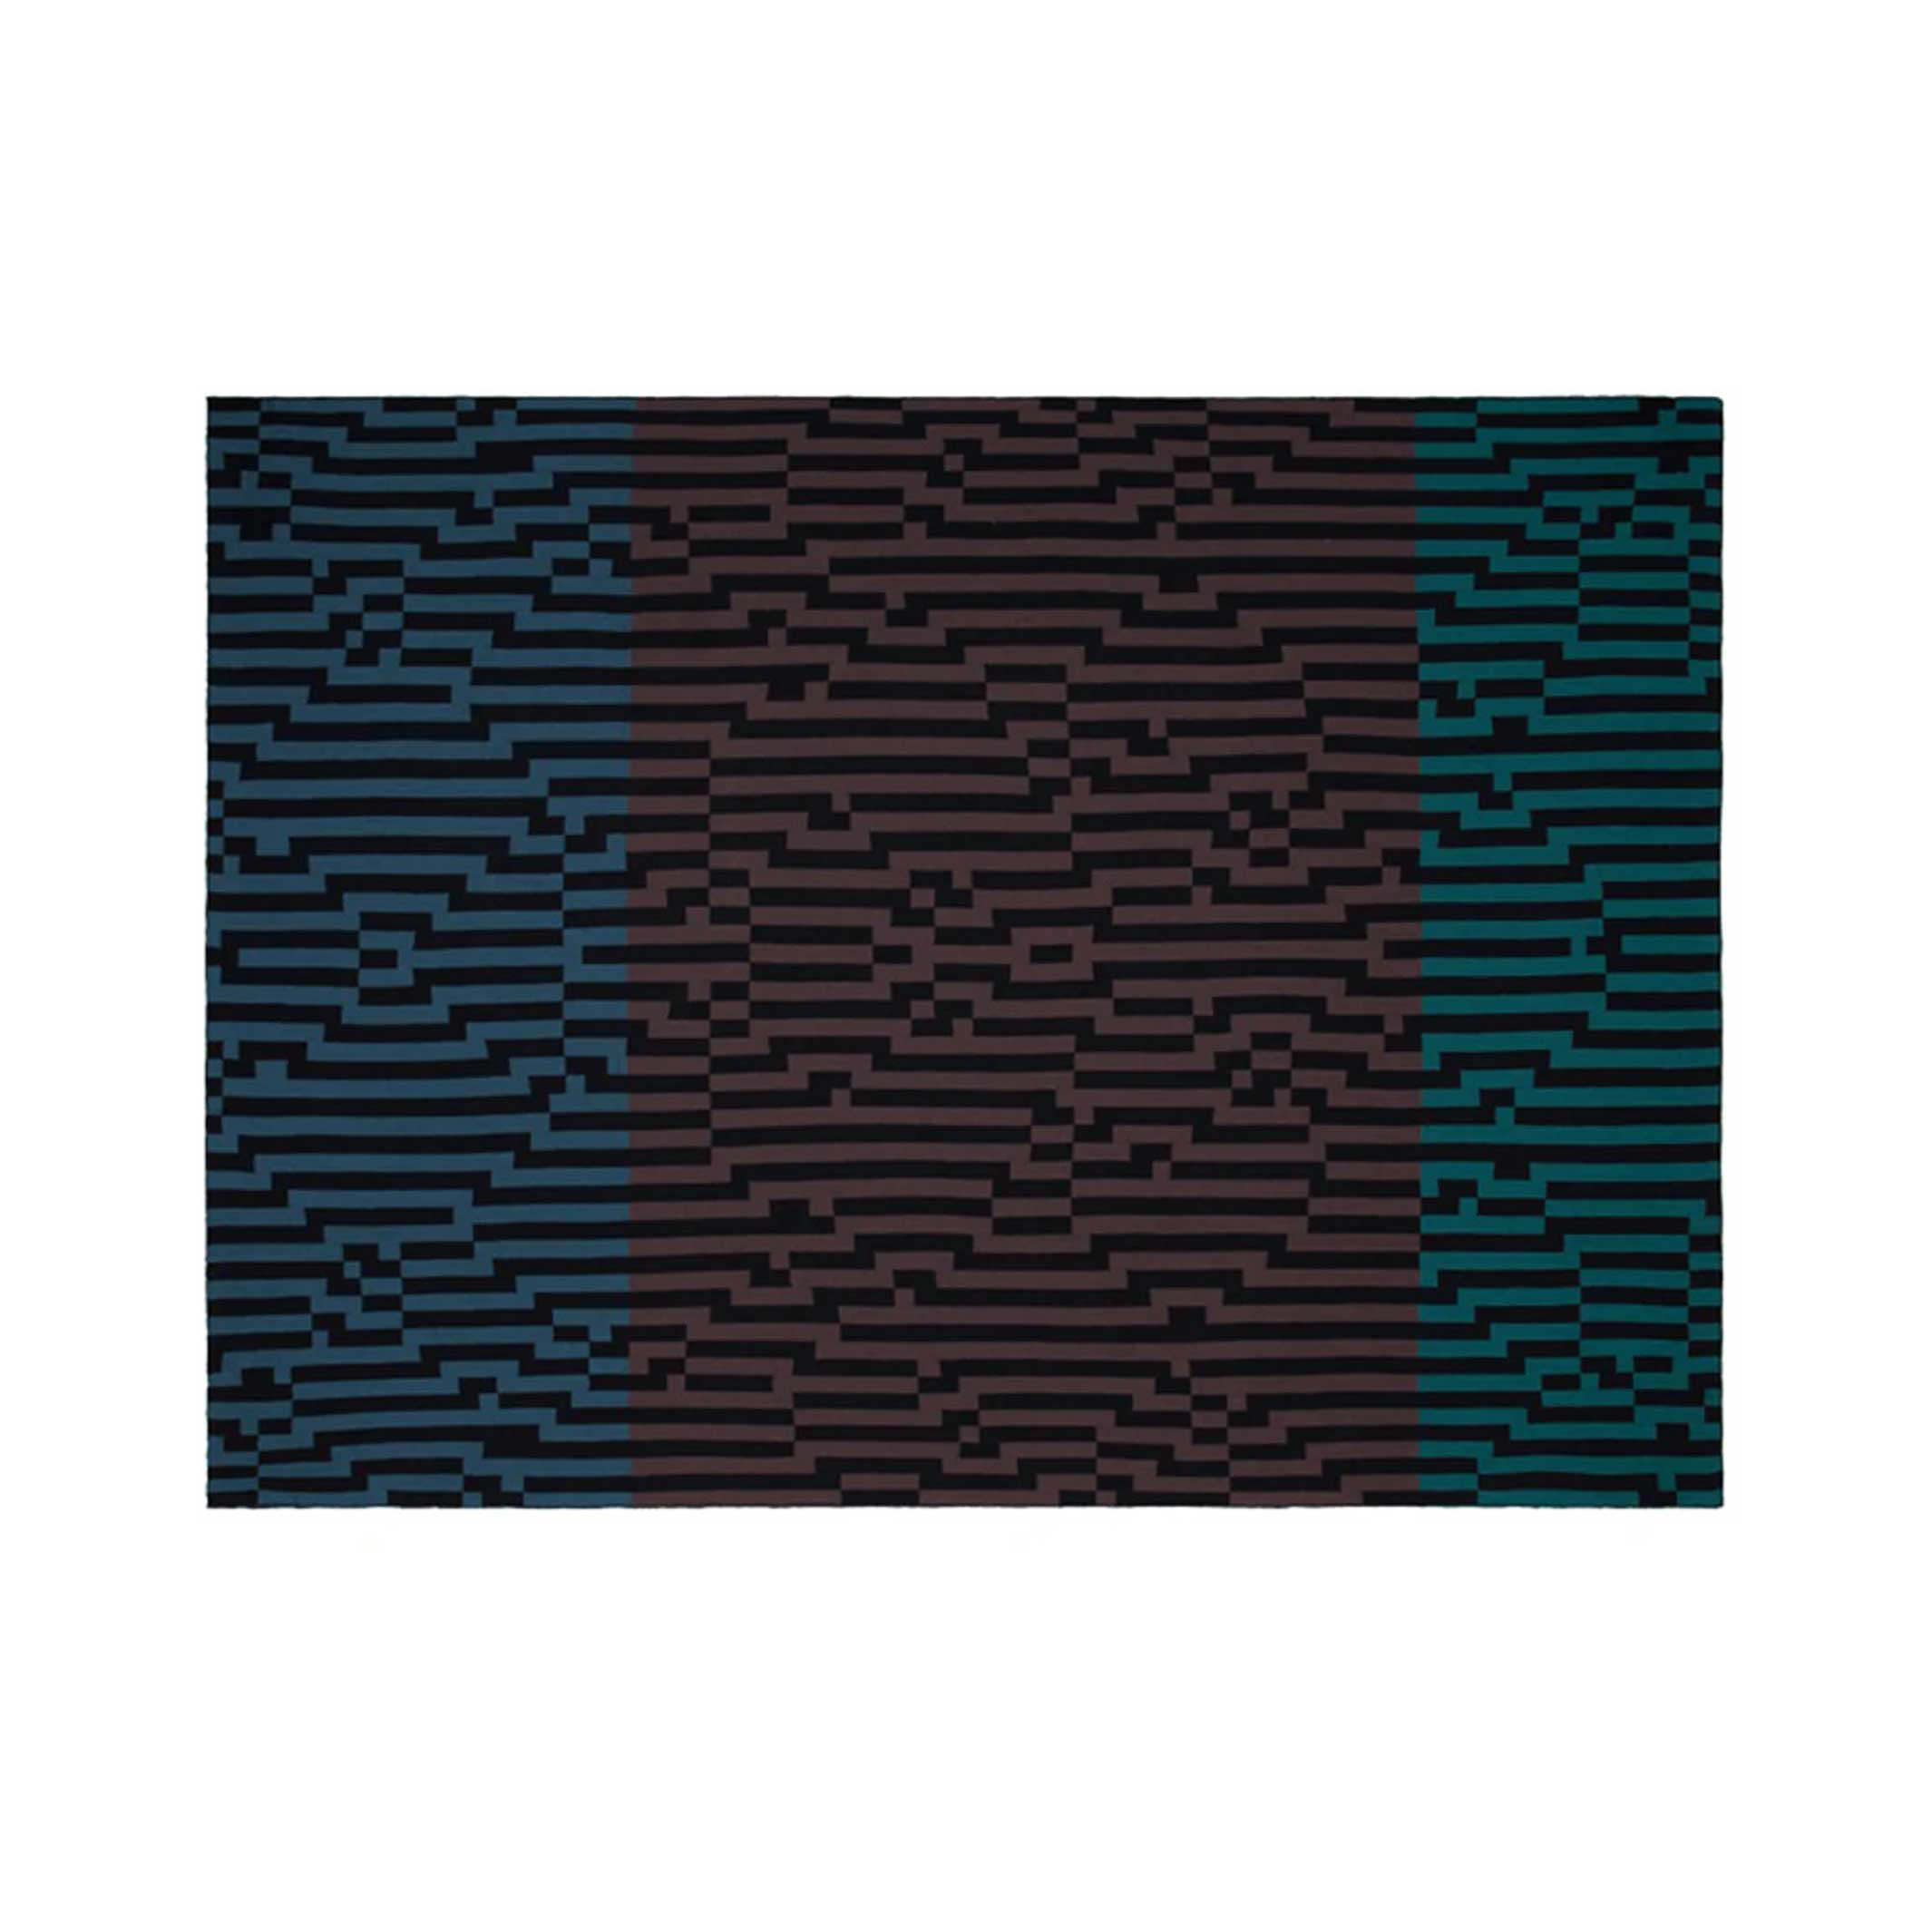 BITMAP ZOOM OUT 1 | Blau, Braun & mint-fabige TAGESDECKE | 180x140 cm | 100% Merino Wolle | Cristian Zuzunaga